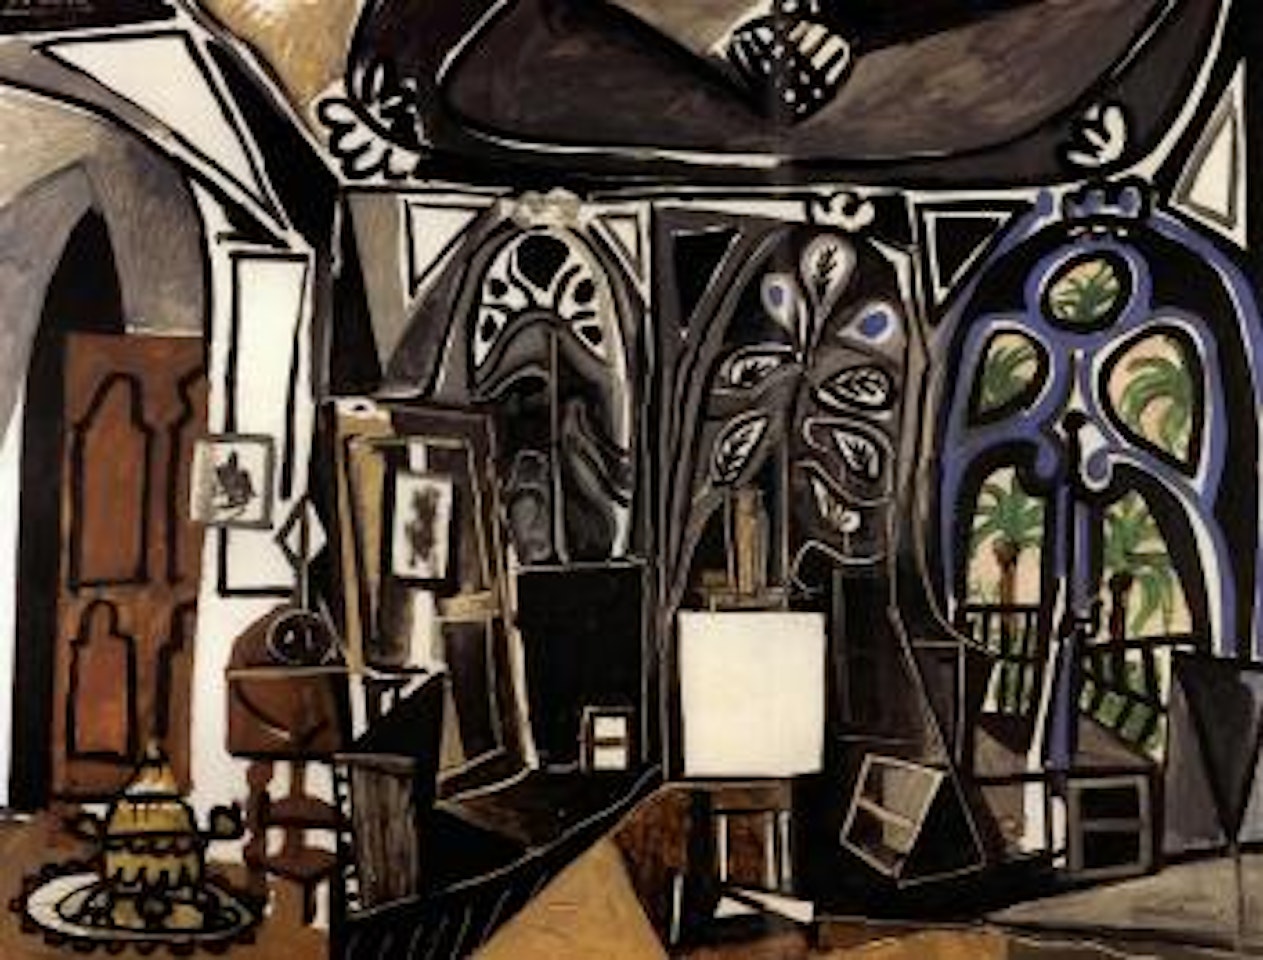 L'atelier by Pablo Picasso